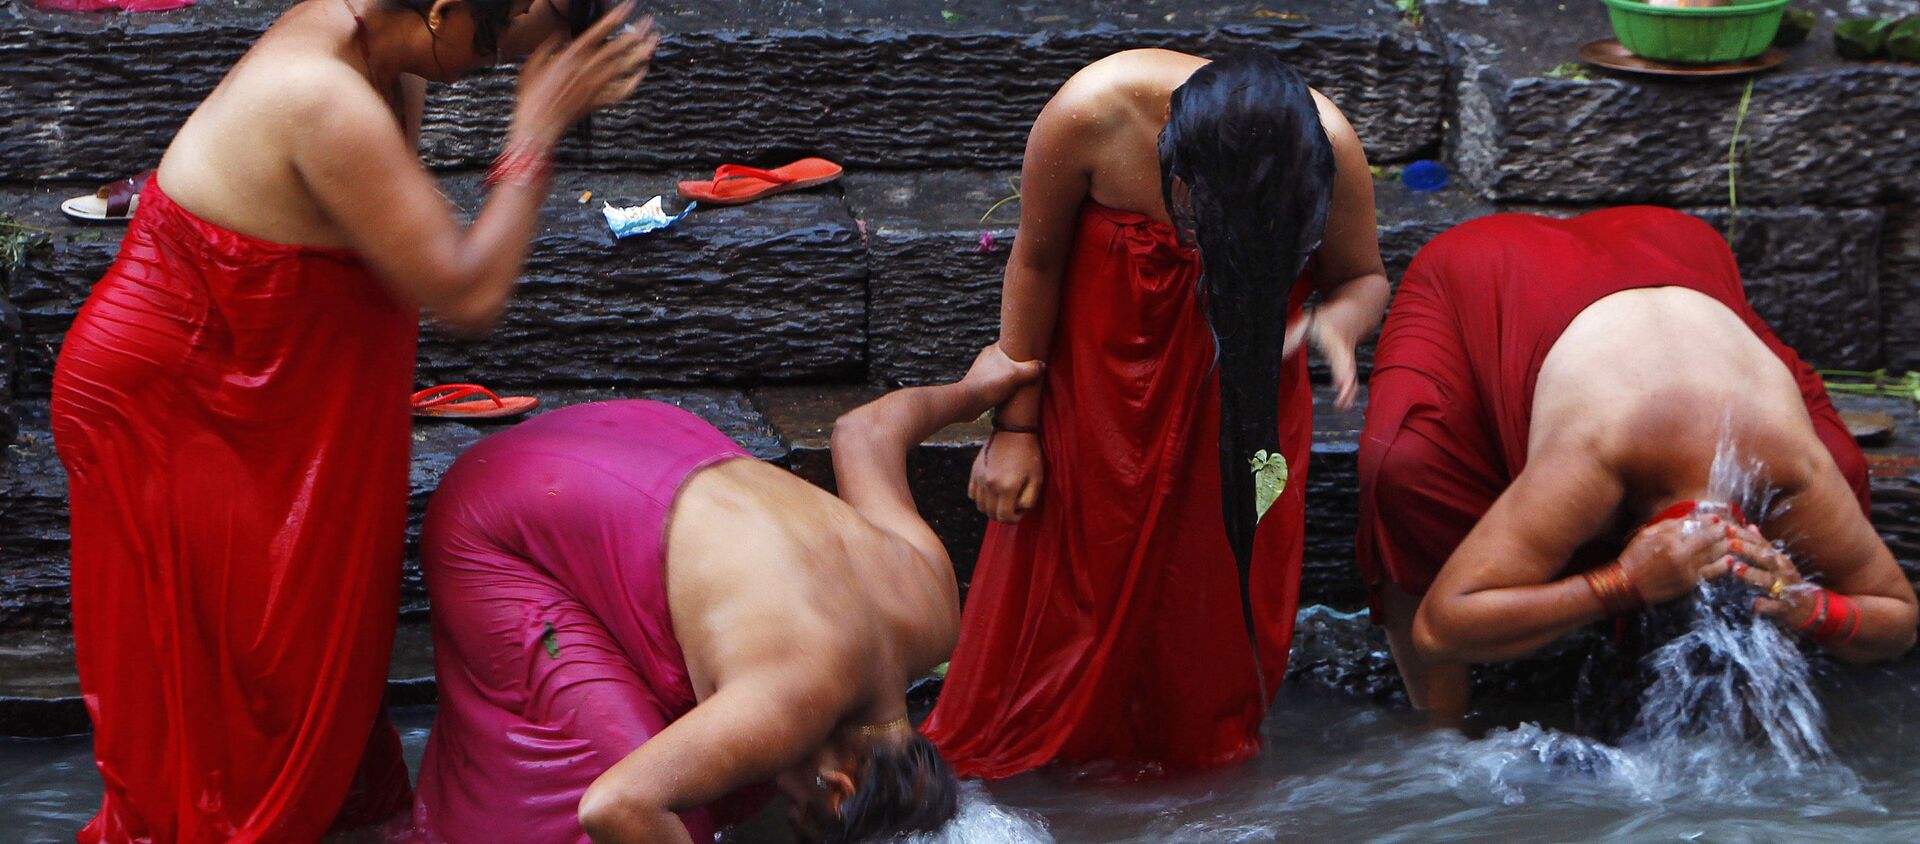 Mujeres nepalíes bañándose tras pasar la menstruación - Sputnik Mundo, 1920, 01.10.2020